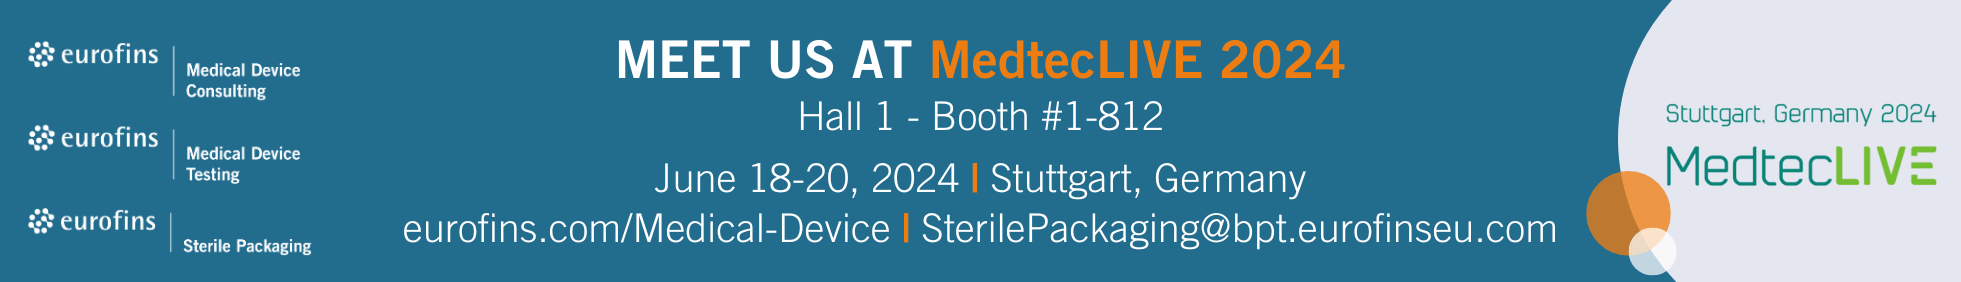 eurofins Medical Device + Sterile Packaging at MedtecLIVE 2024-06-18-20, Stuttgart, Germany, booth 1-812